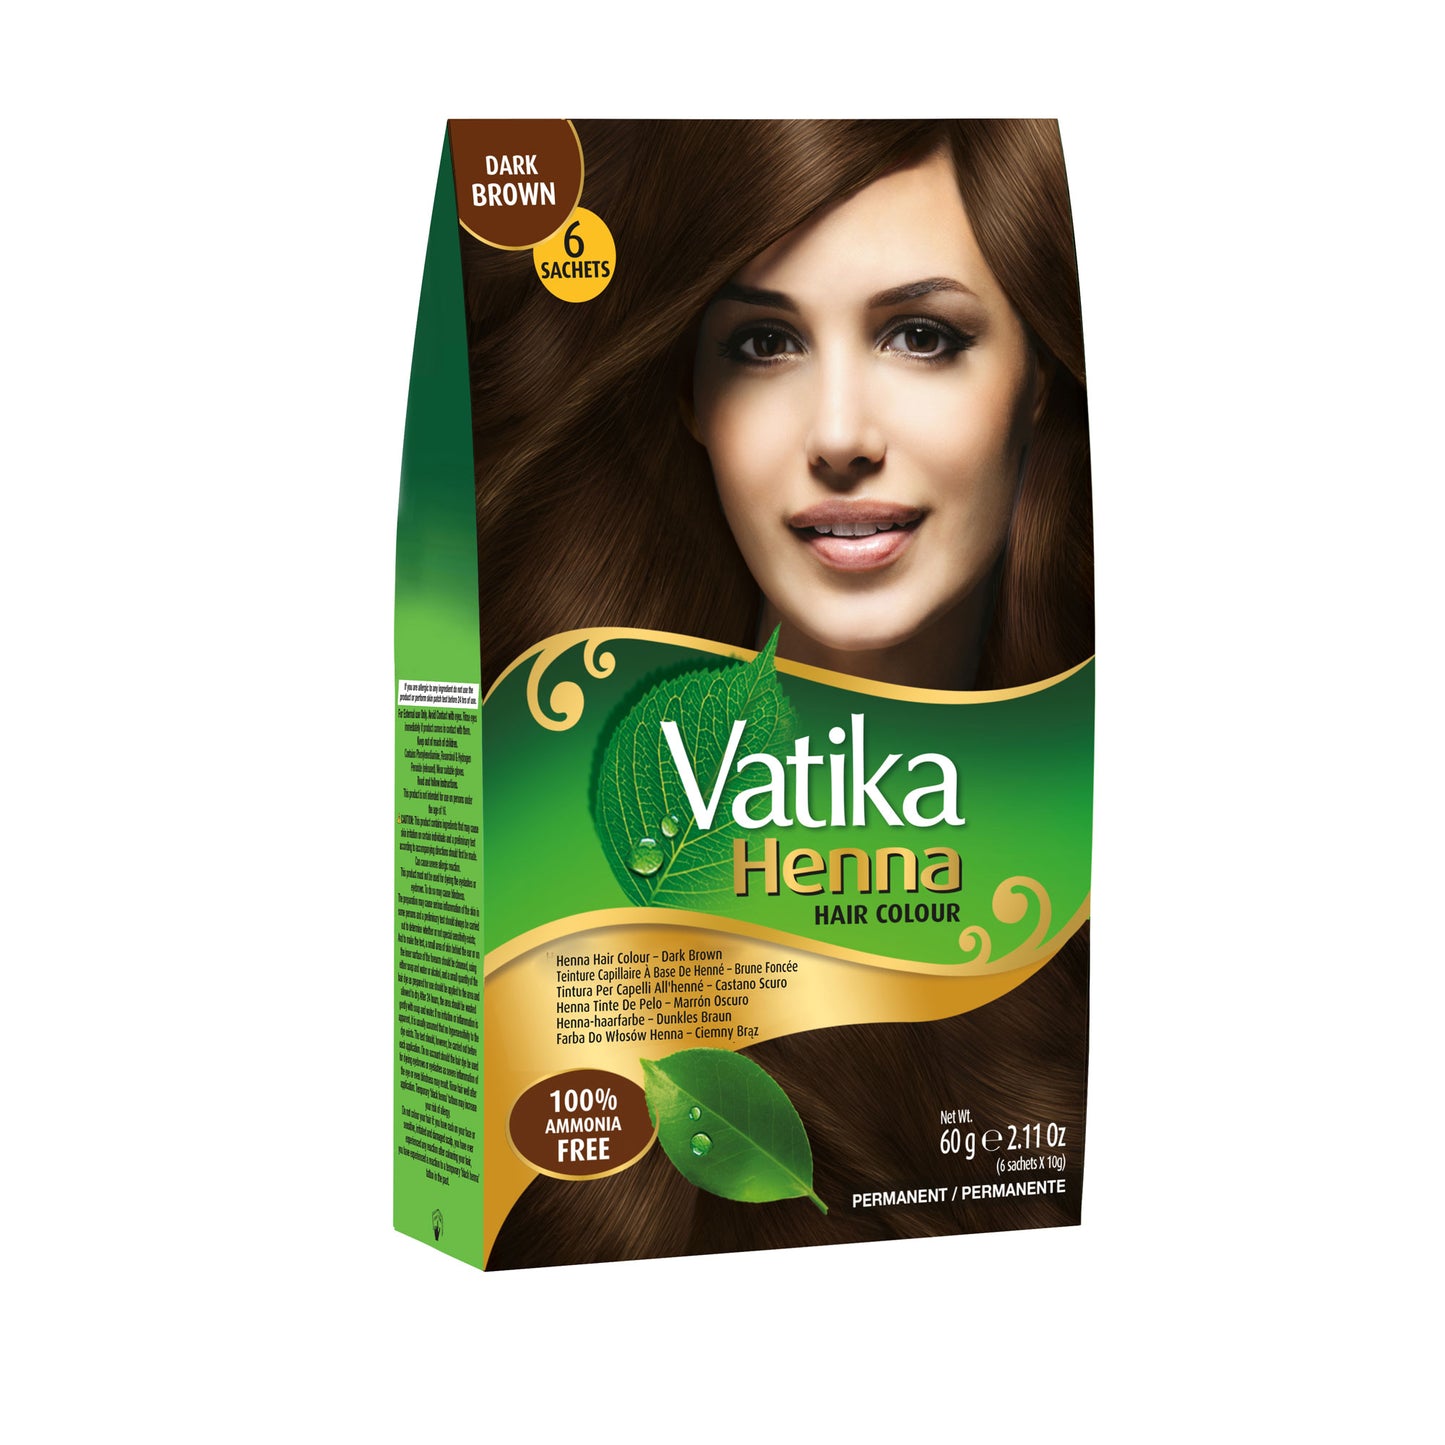 Vatika Henna Hair Colour - Drak Brown 10g-UK-New